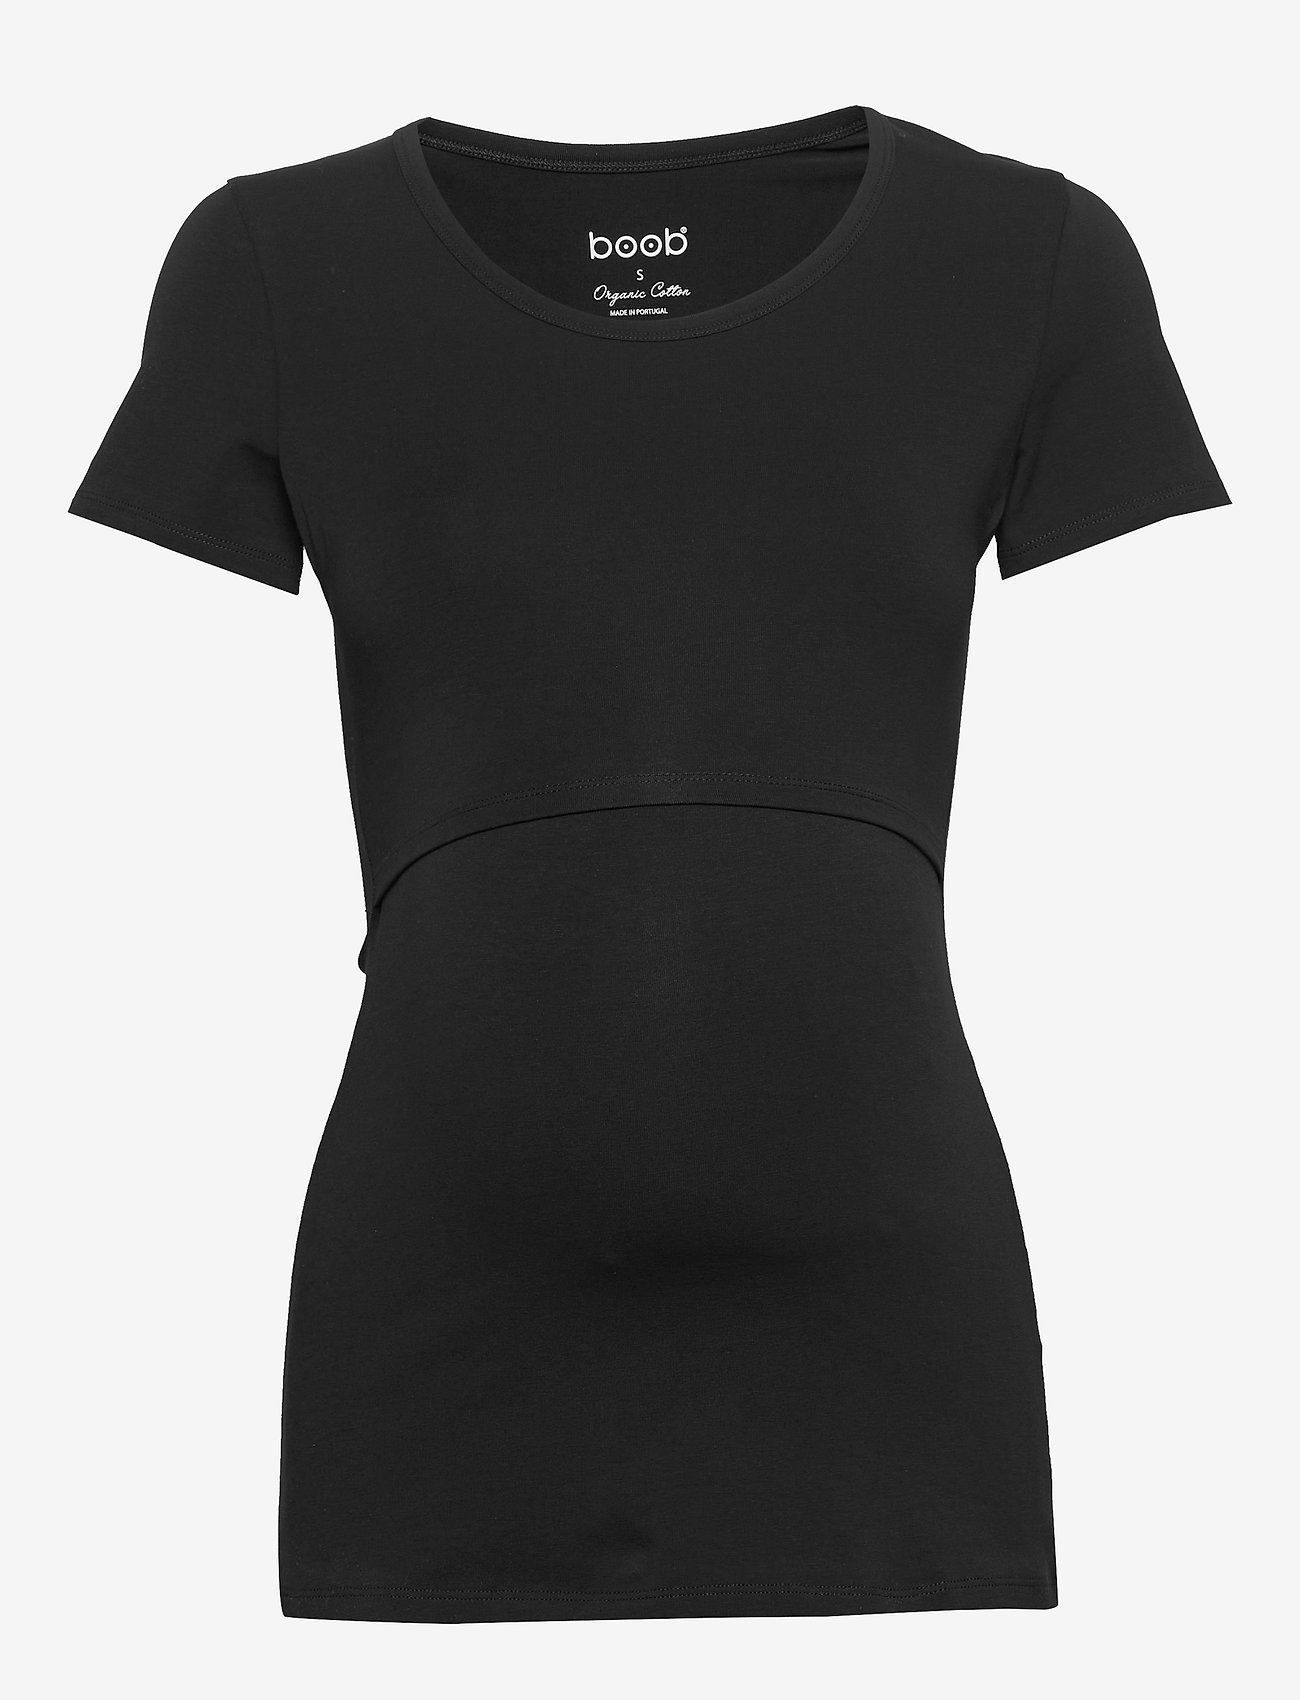 Boob - Classic s/s top - t-shirts - black - 0